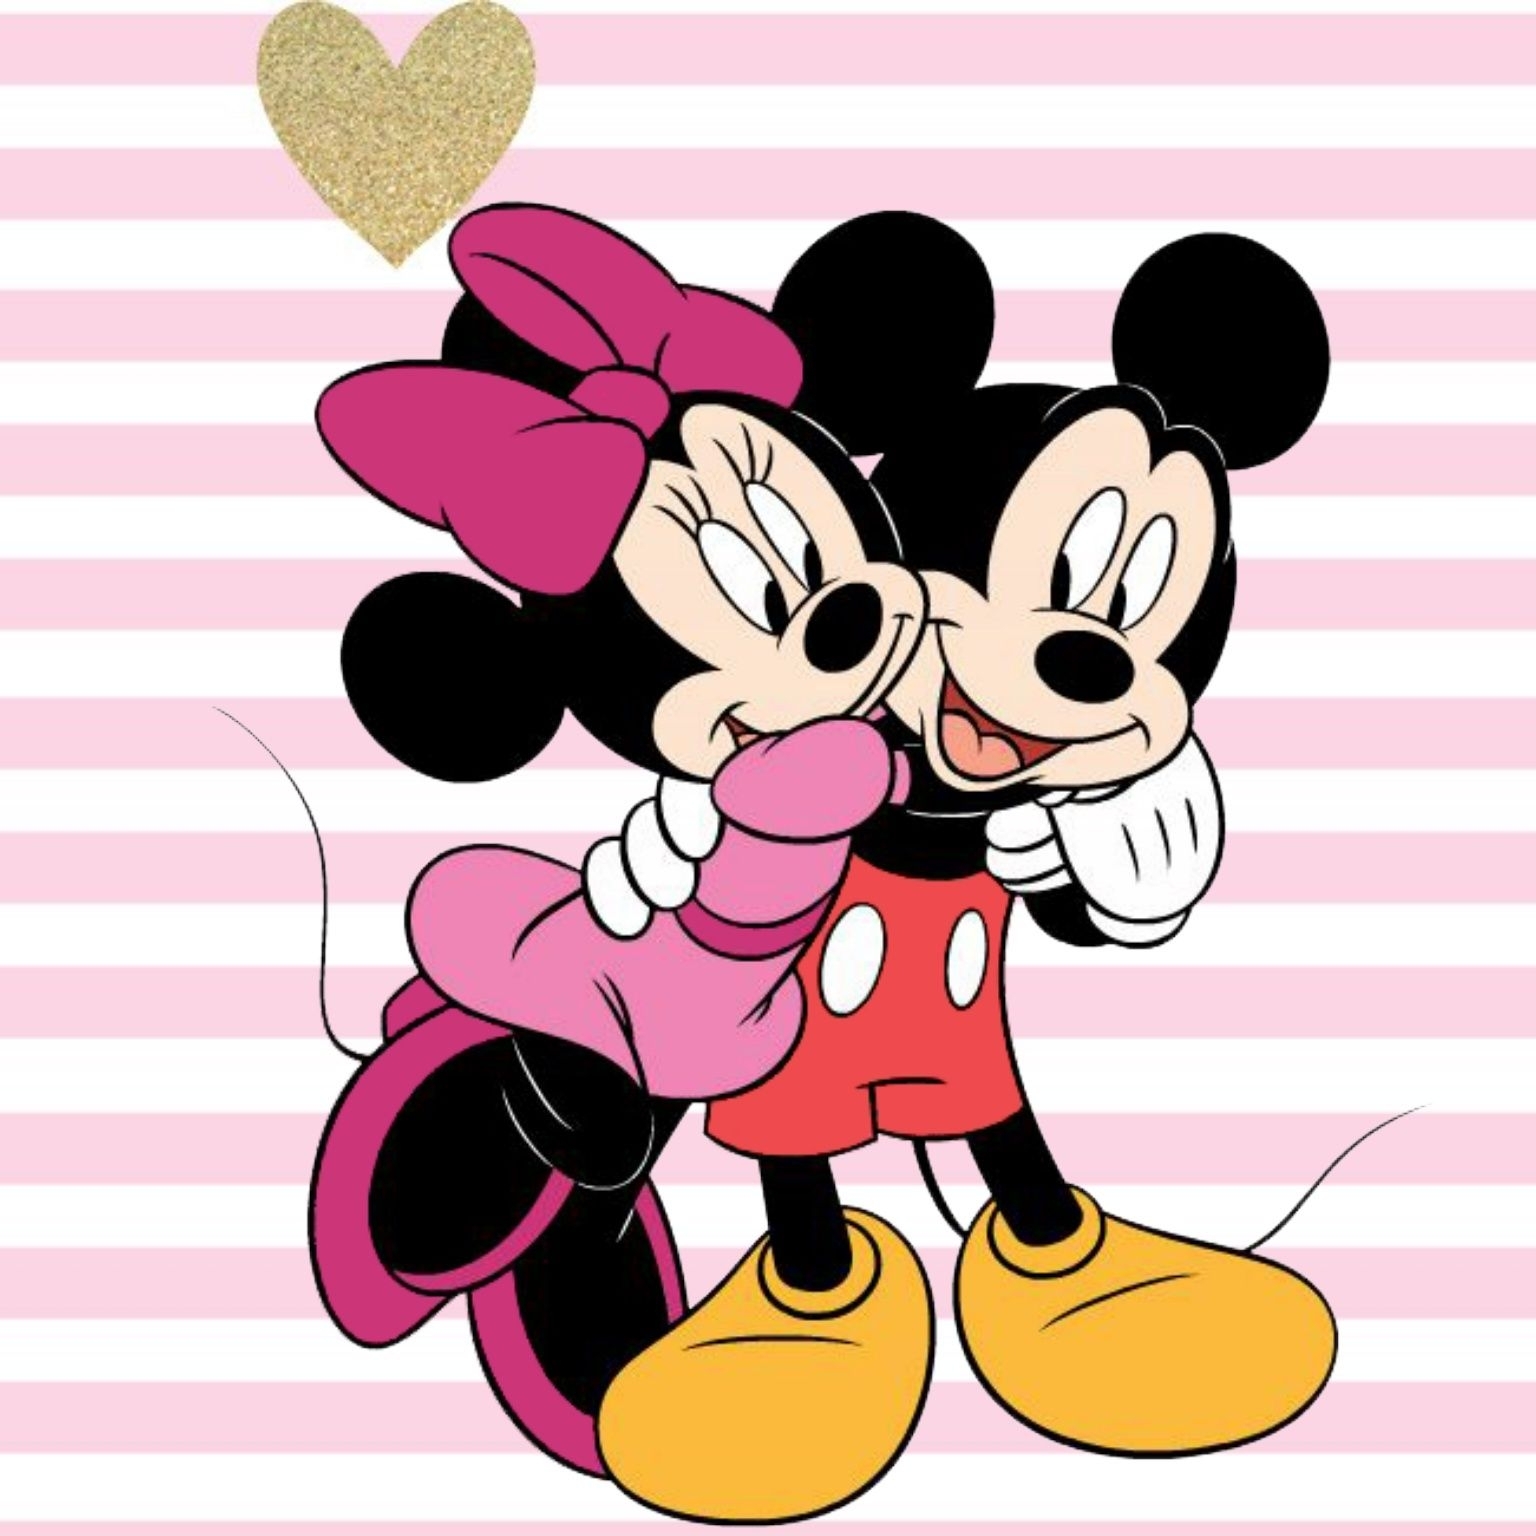 minnie giving a hug to her sweetheart mickey. | mickey and minnie